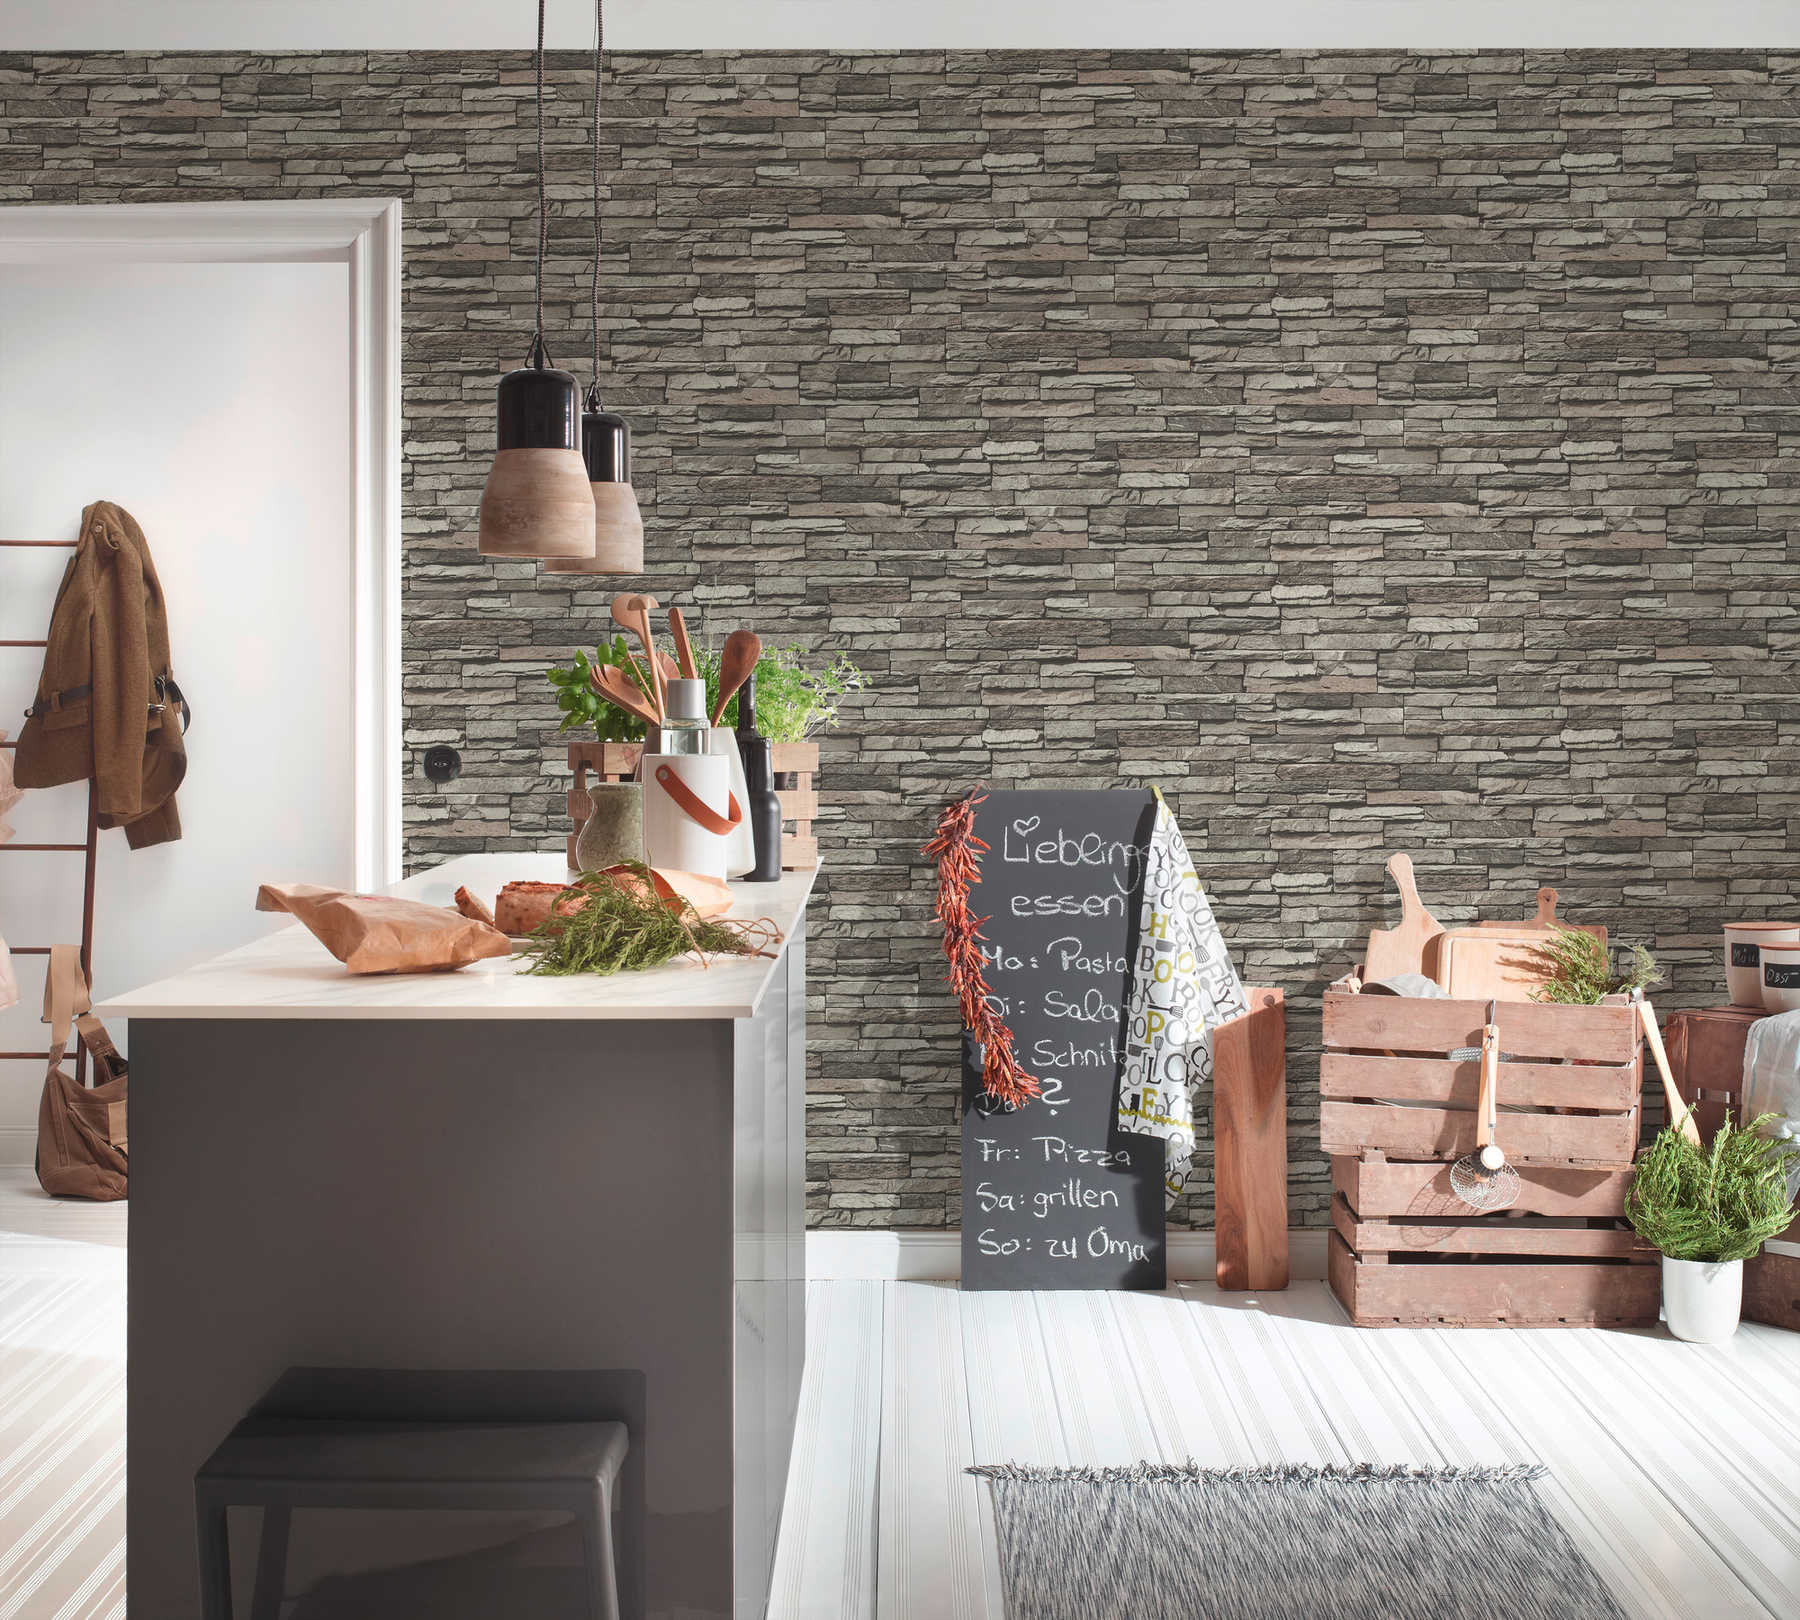             3D wallpaper with light grey stone wall motif - grey, cream, black
        